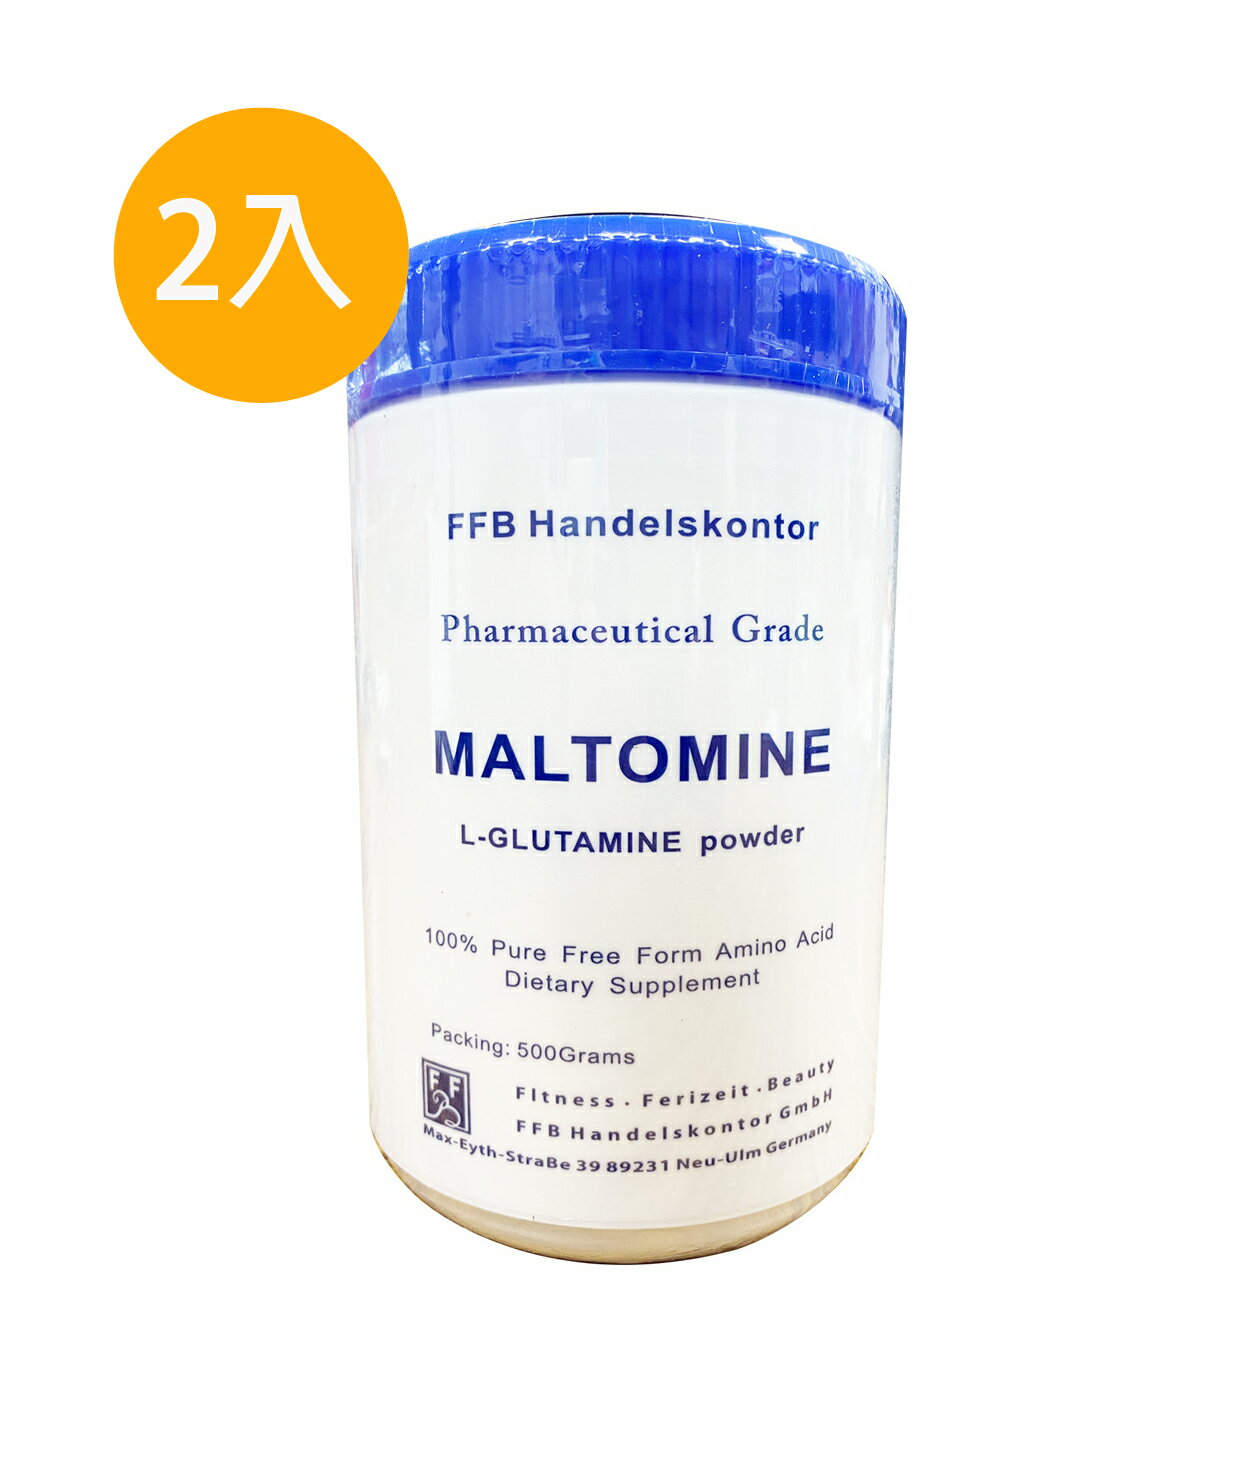 FFB富保樂MALTOMINE高單位左旋麩醯胺酸500公克 德國進口